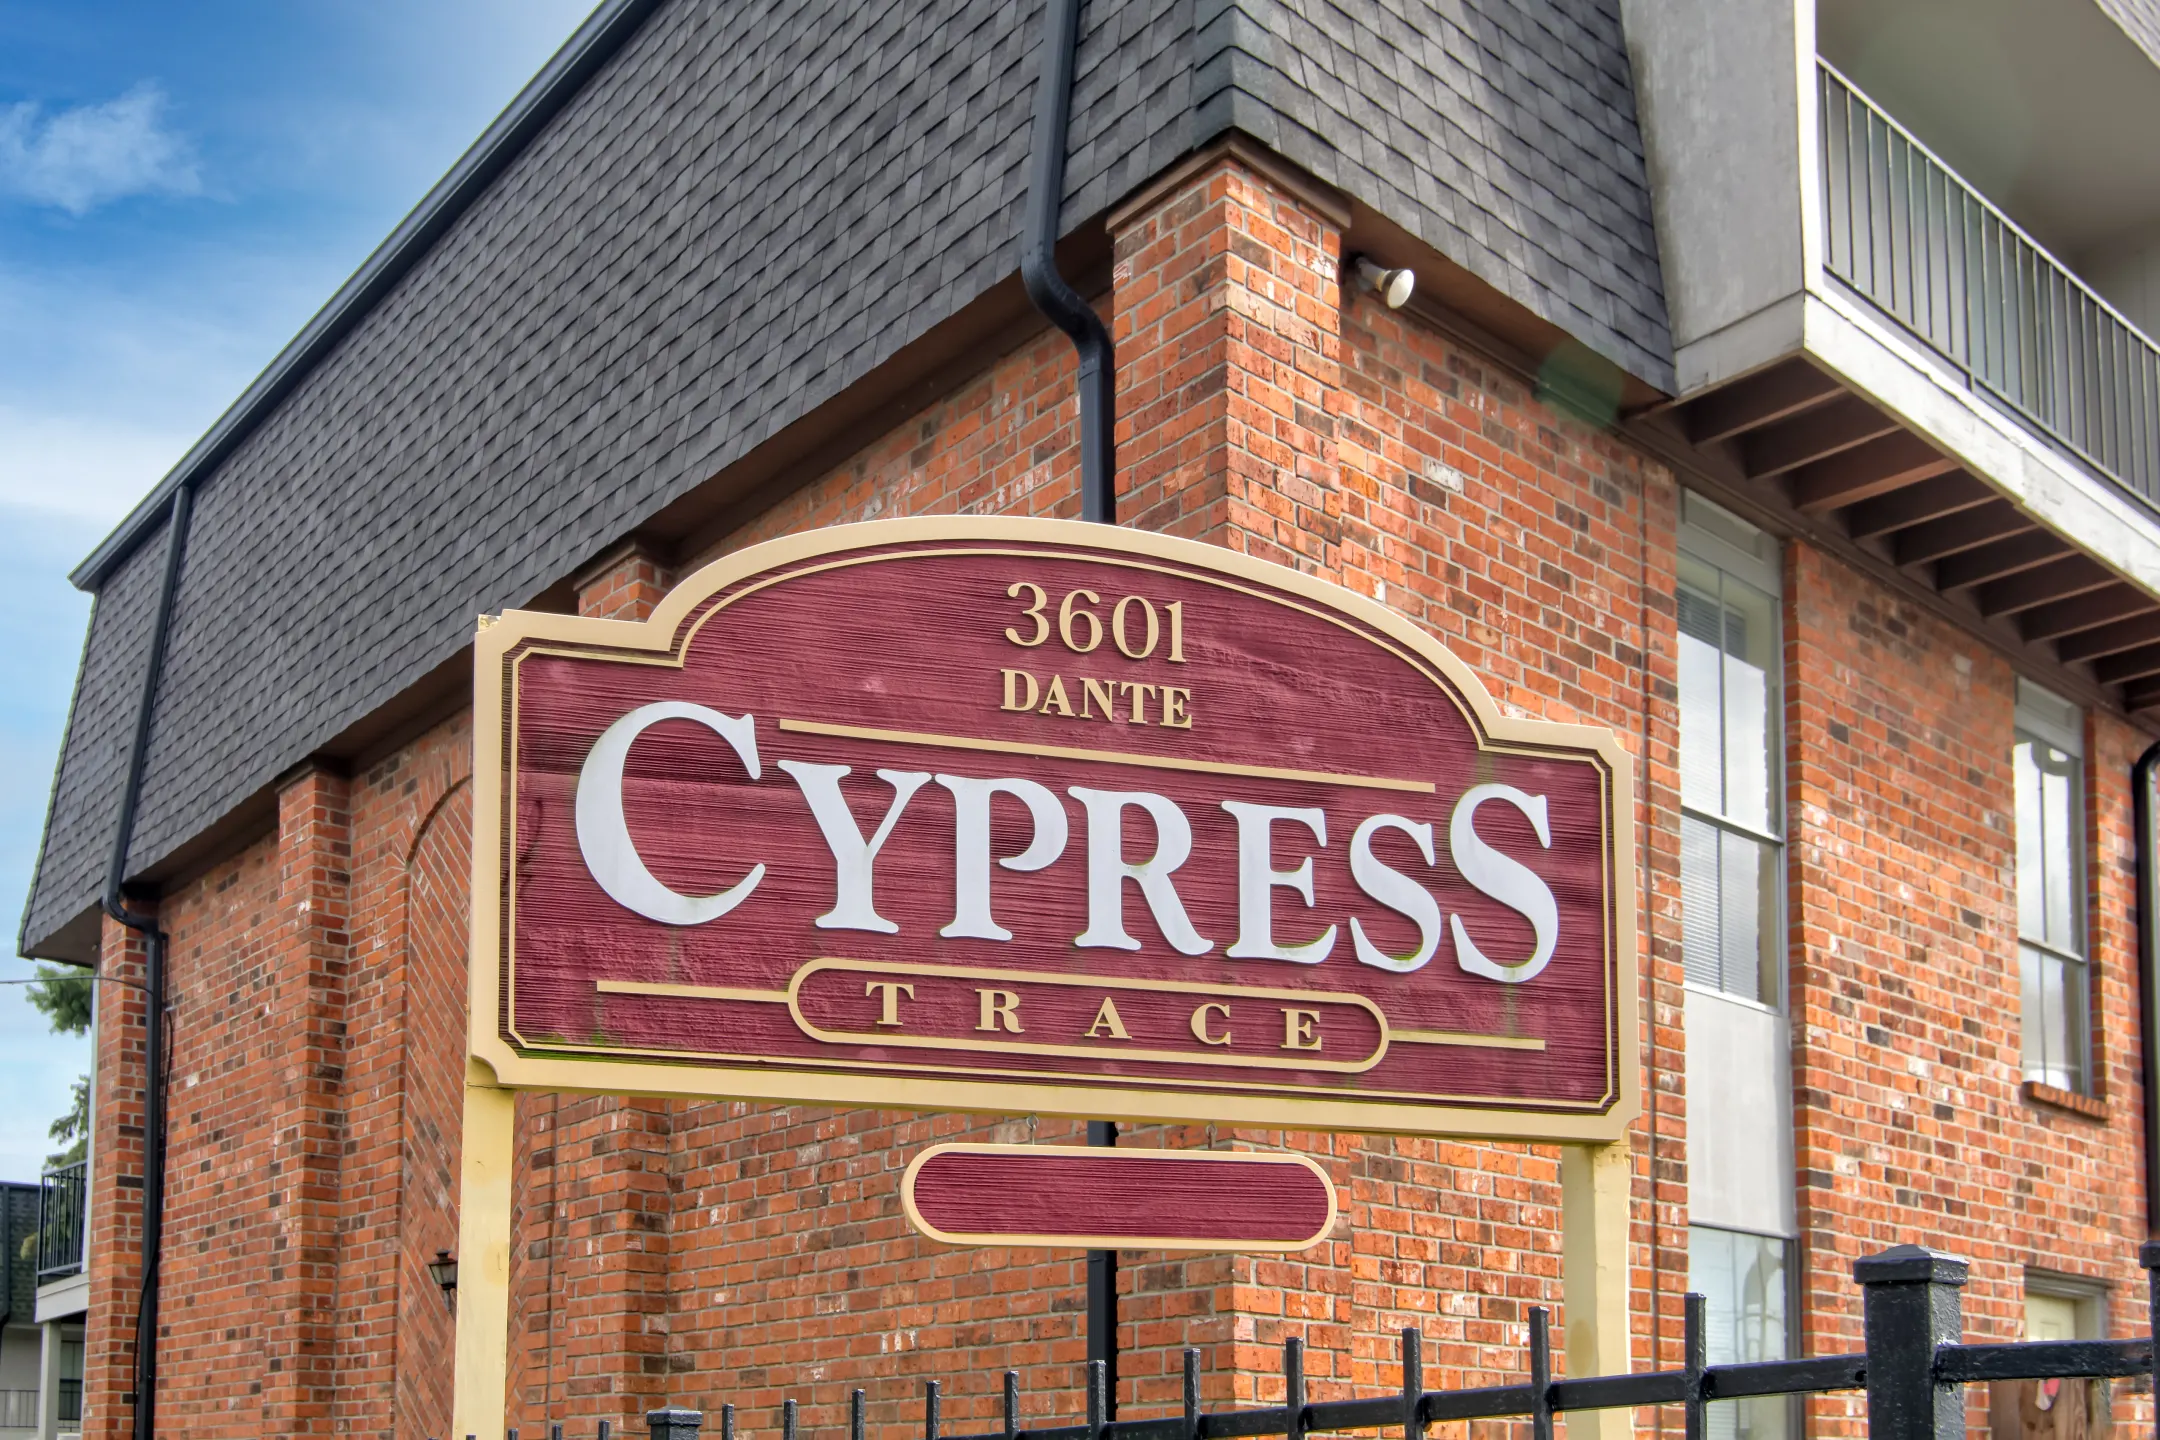 Community Signage - Cypress Trace Apartments - New Orleans, LA